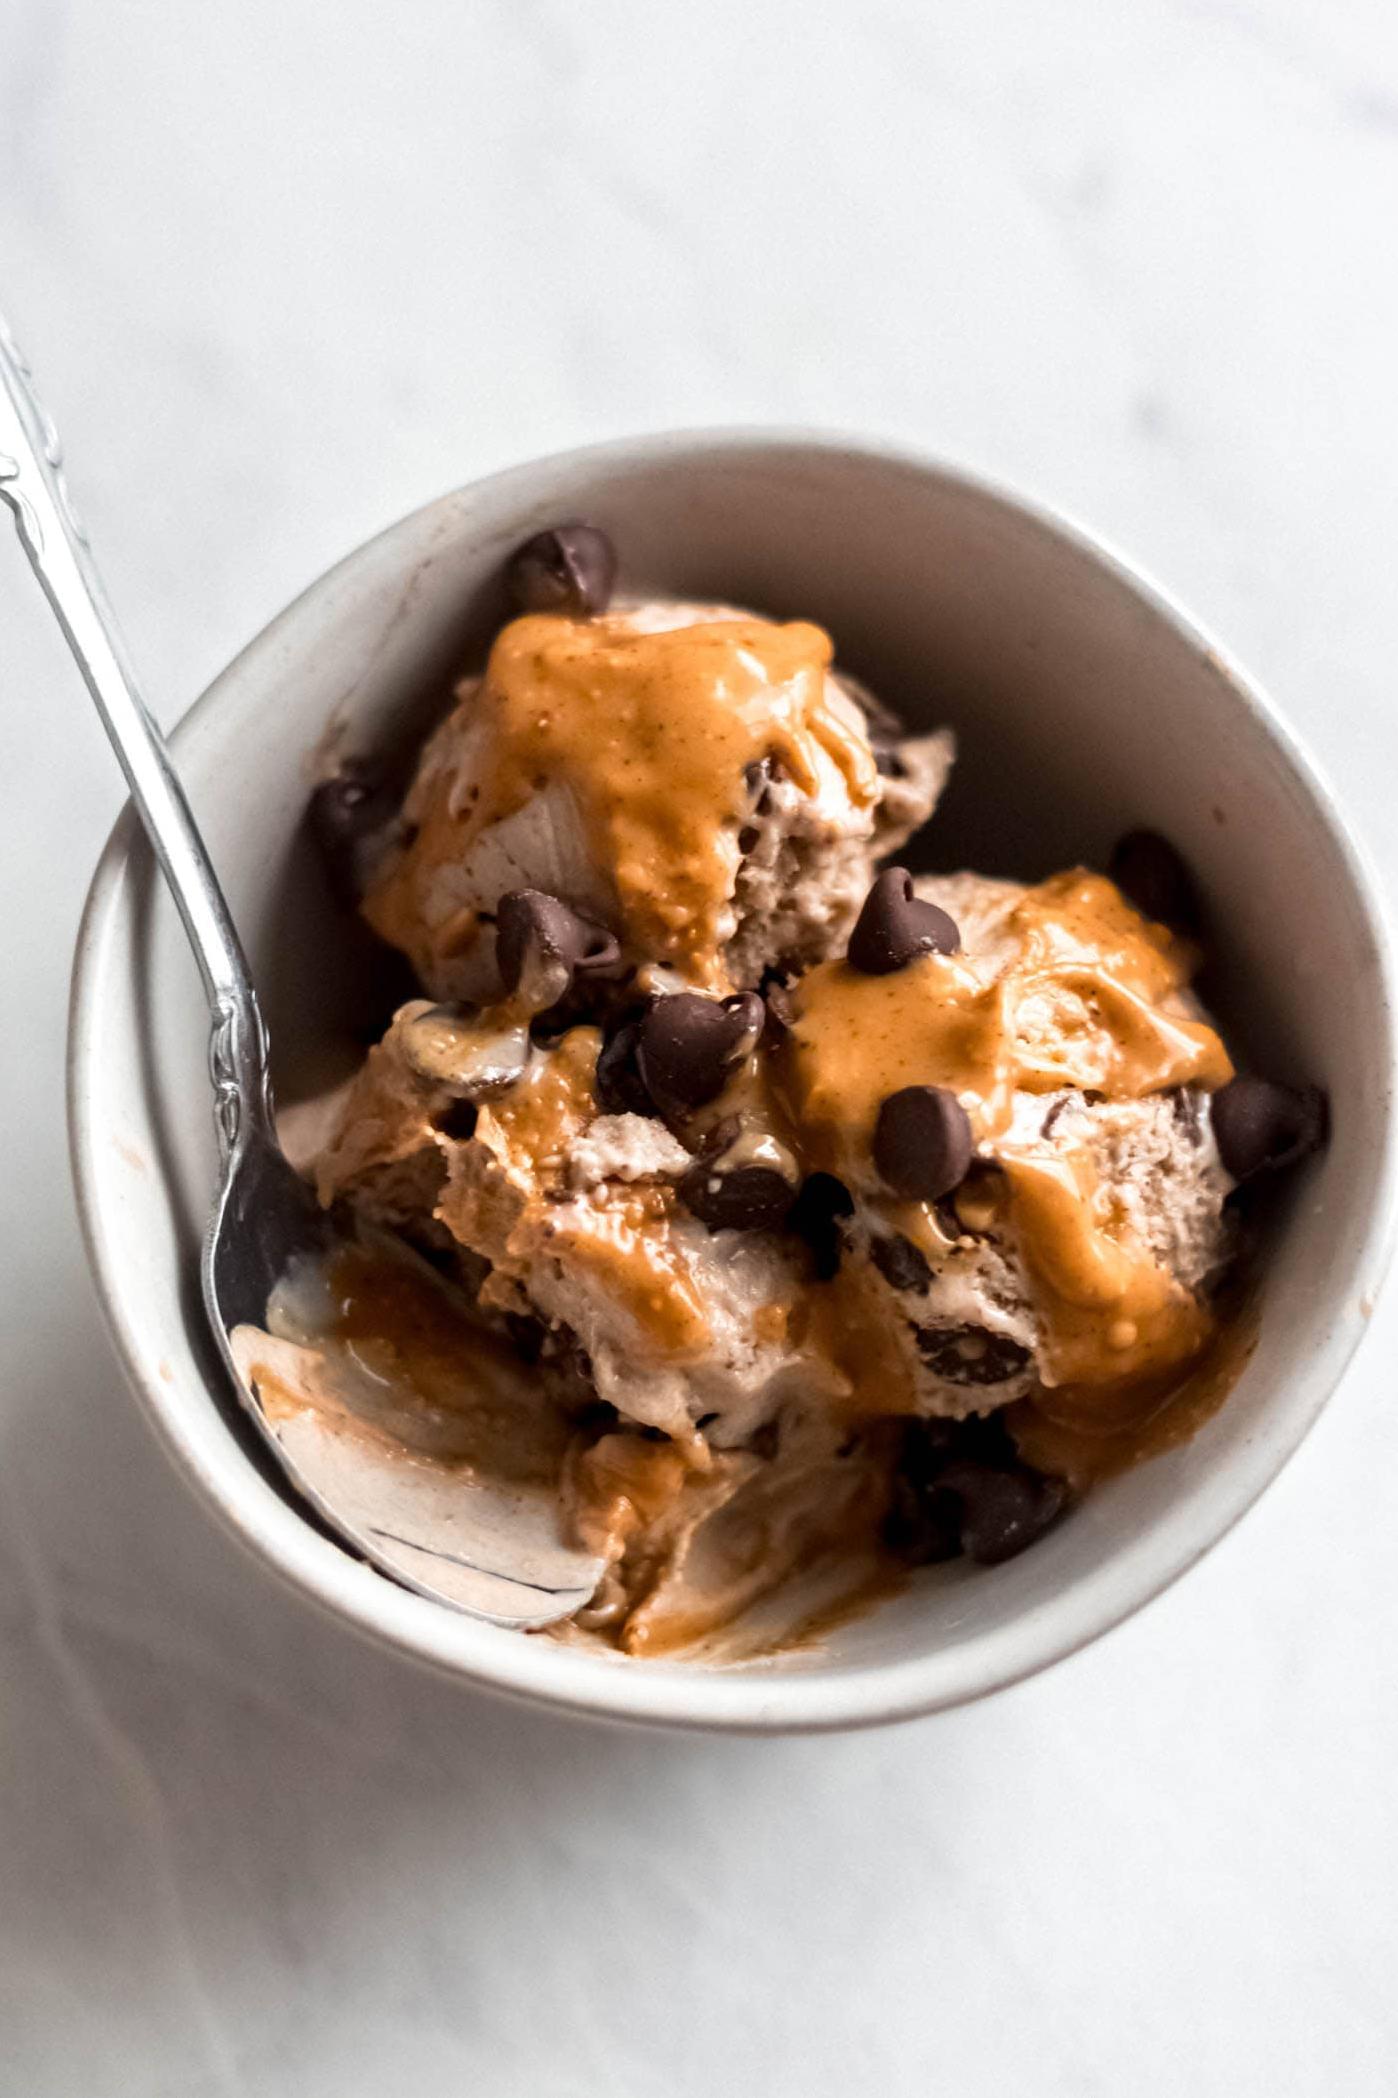  Dive into this bowl of creamy banana caramel ice cream